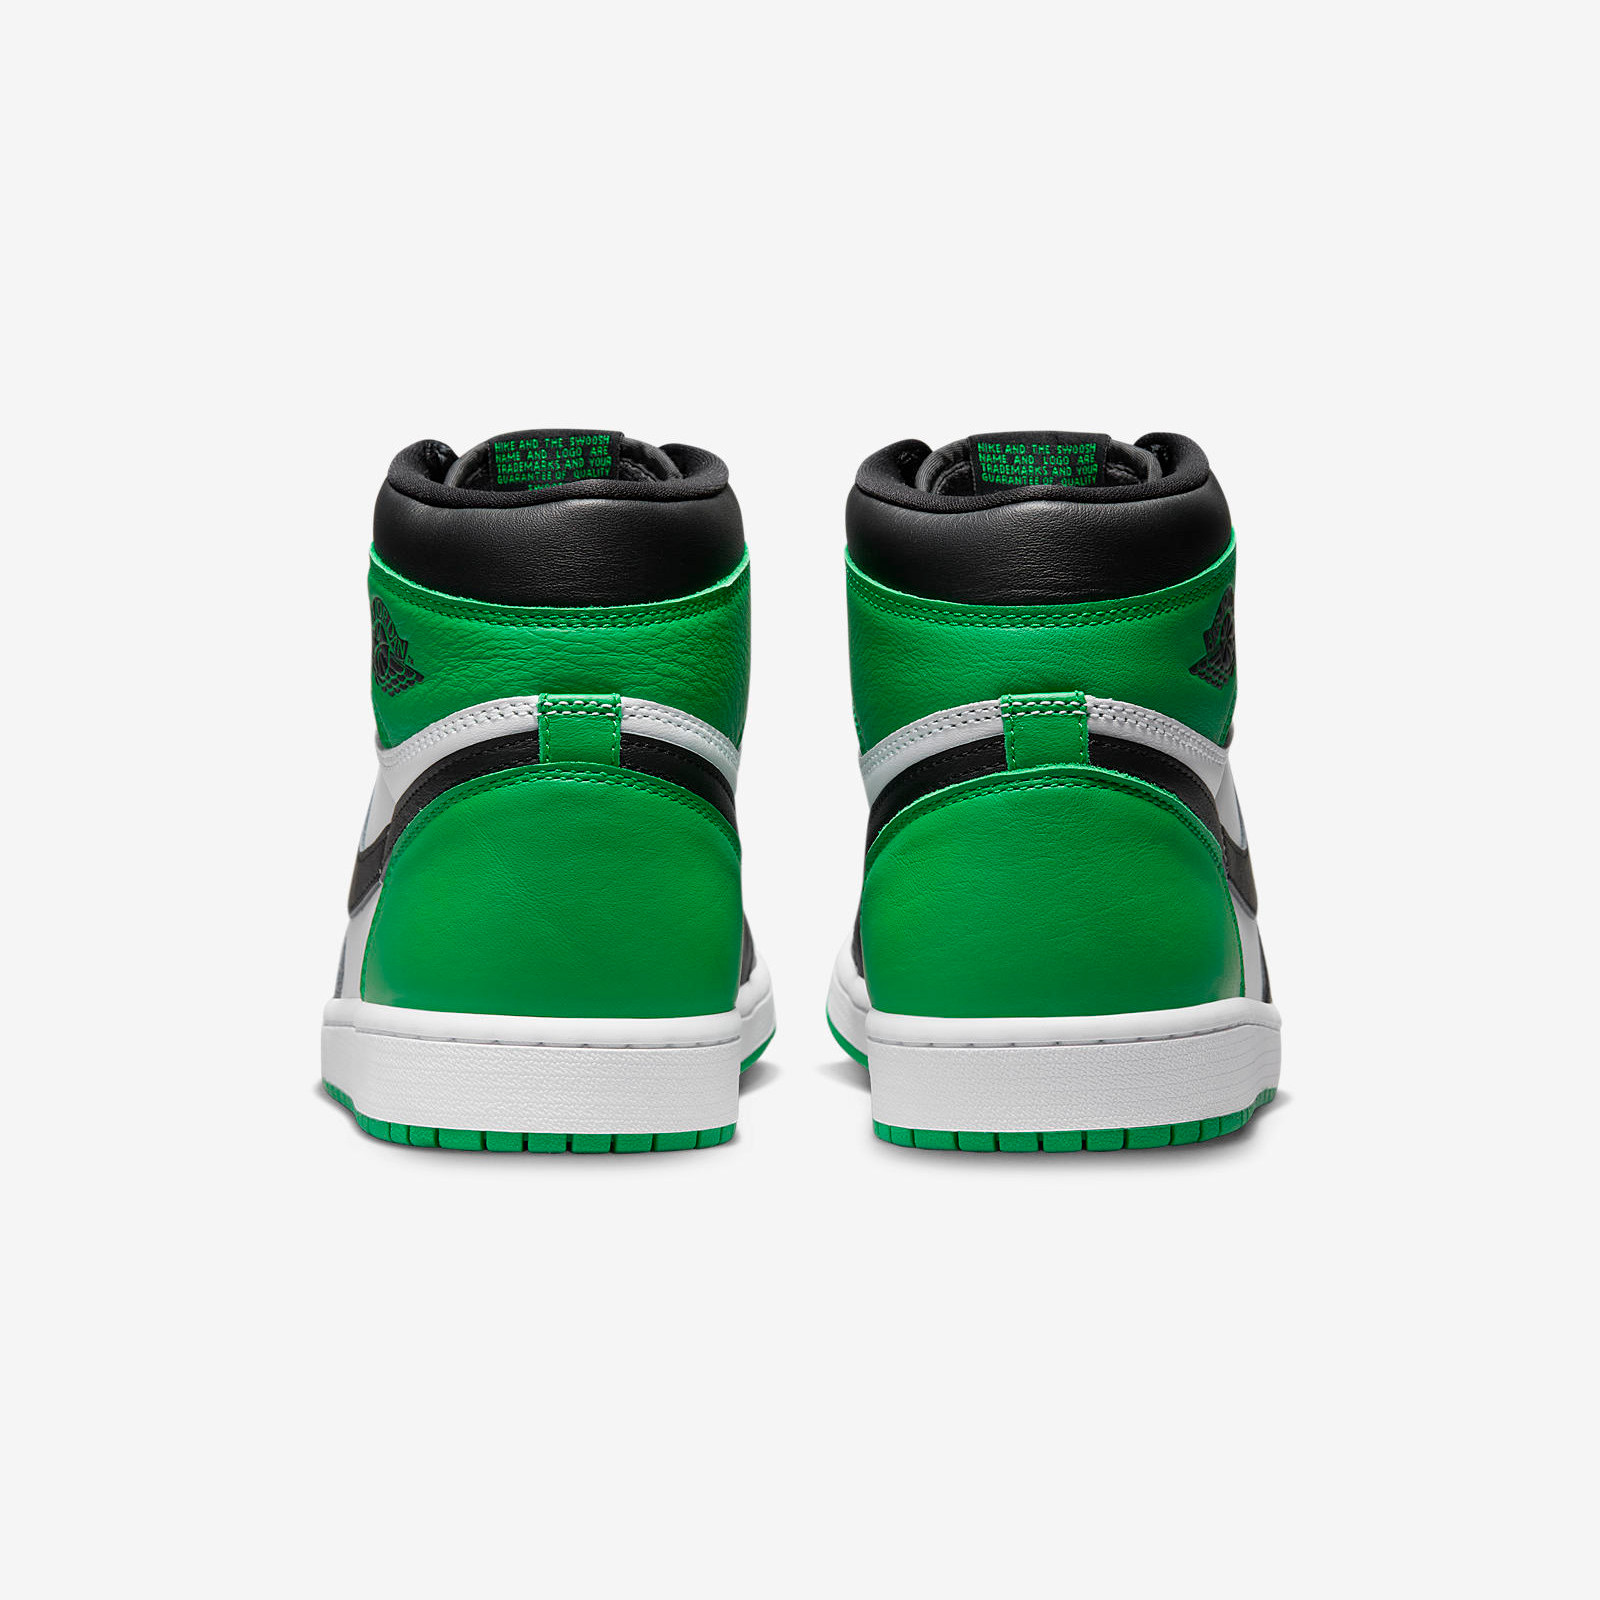 Air Jordan 1 Retro High OG
« Lucky Green »